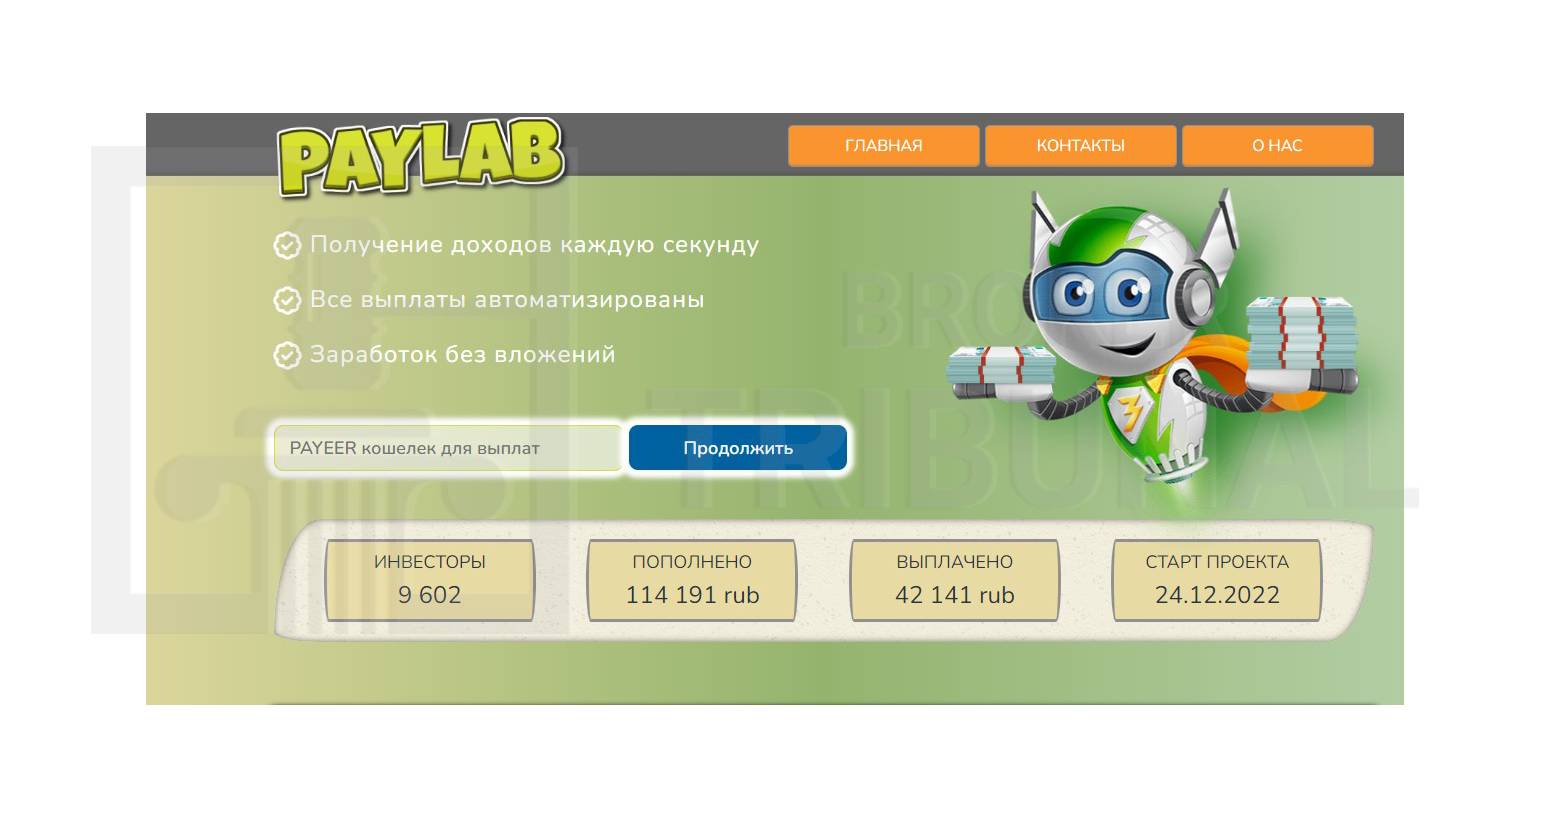 Paylab 